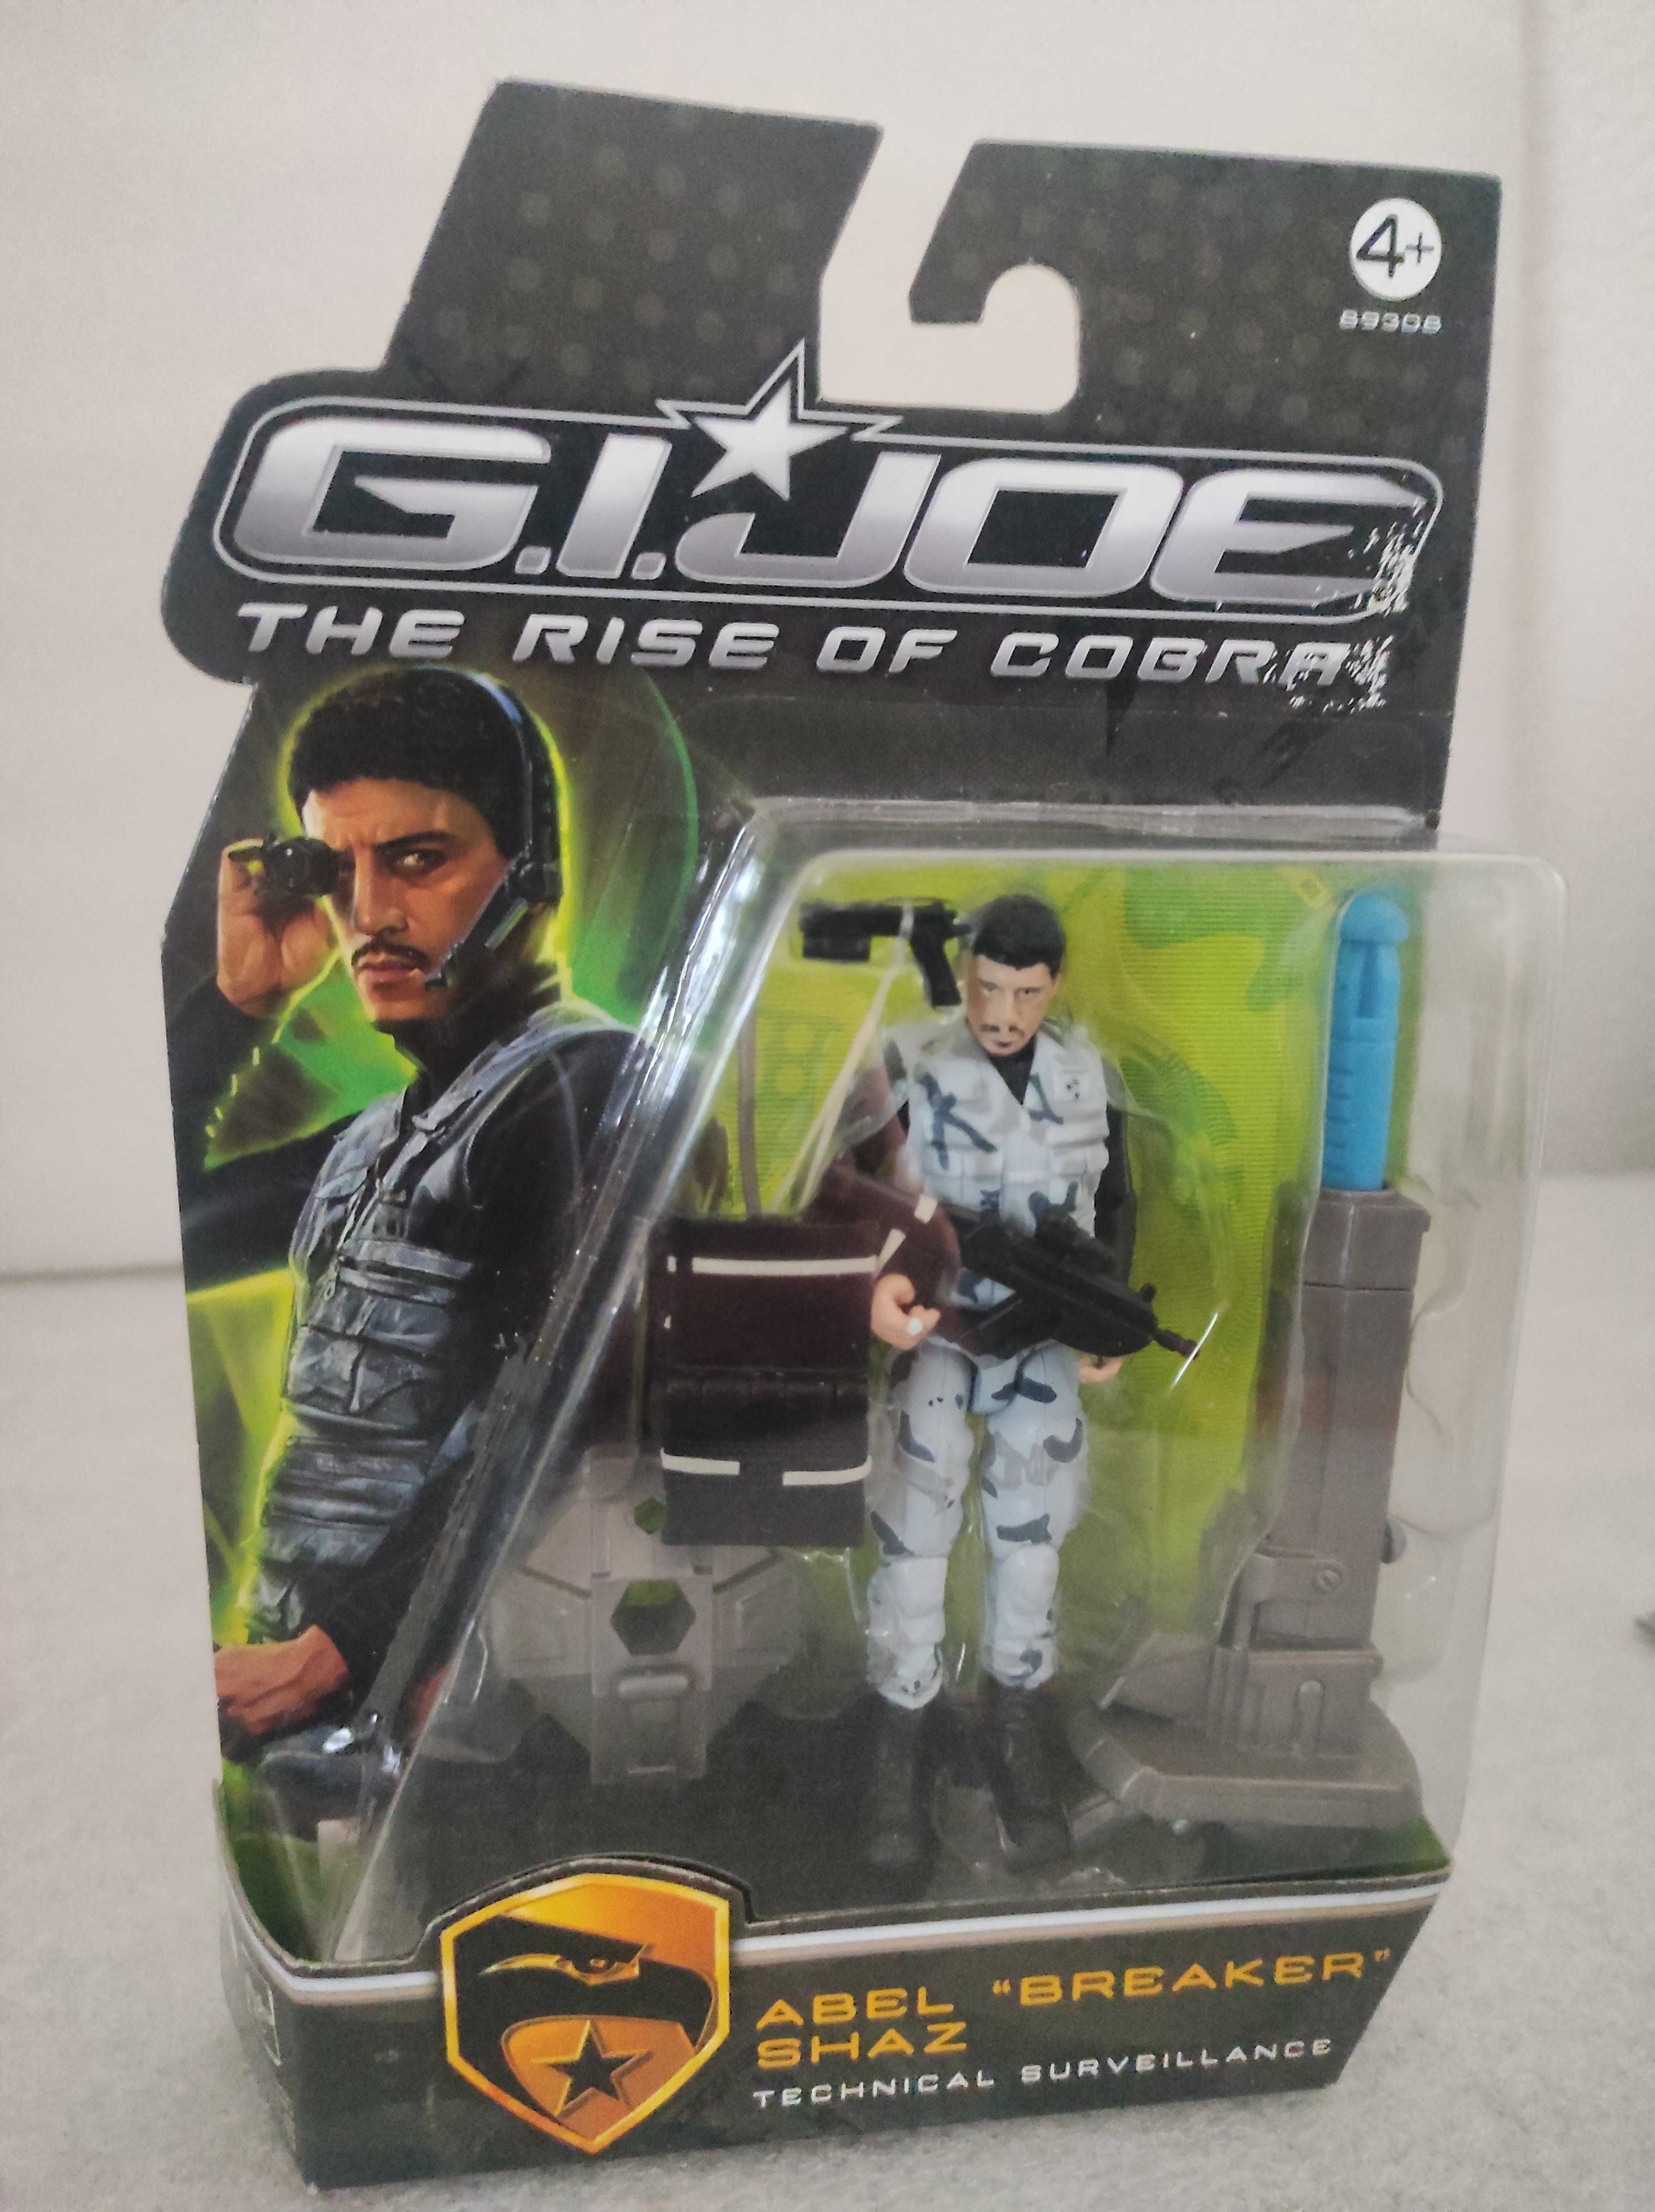 GI JOE Rise of Cobra Action Figure Abel Shaz Technical Surveillance